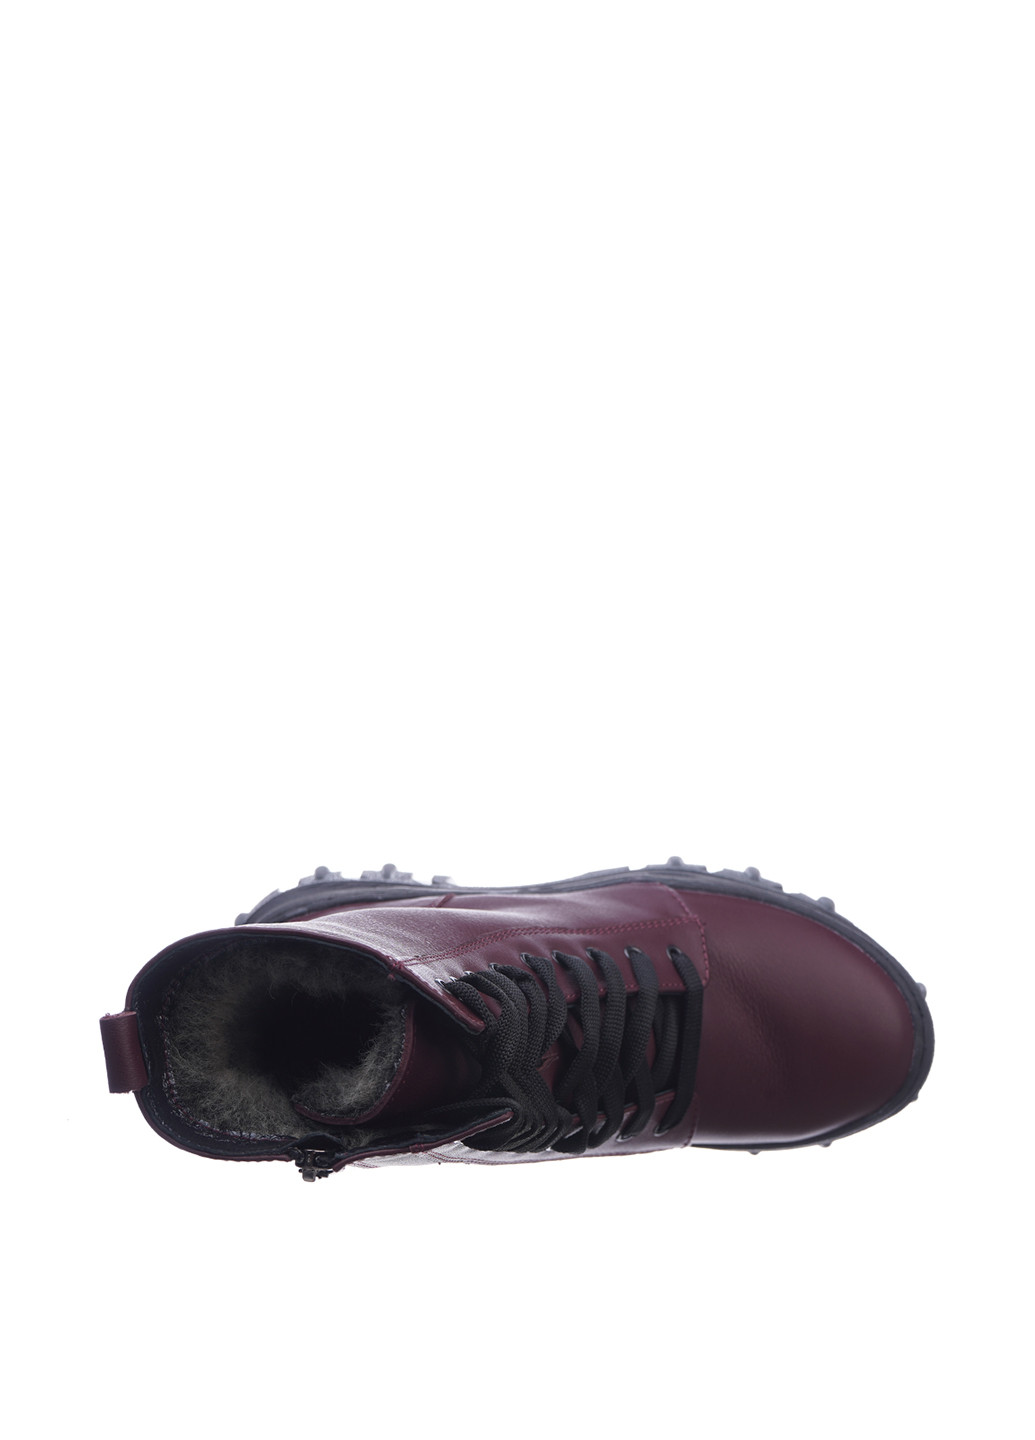 Осенние ботинки Libero со шнуровкой